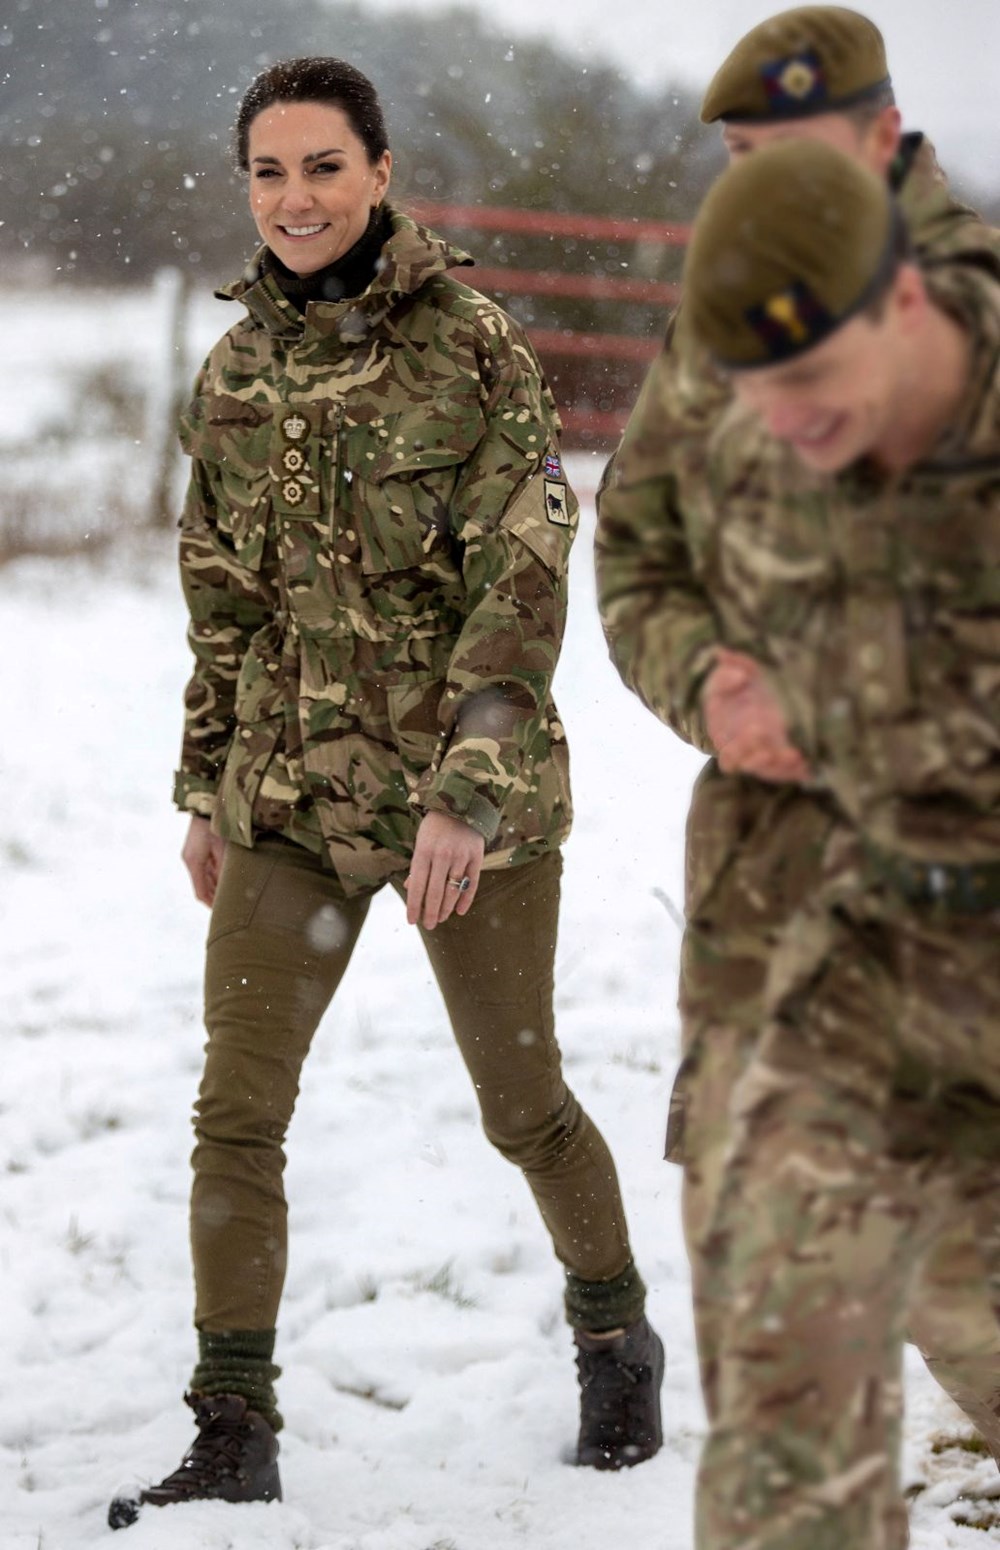 Prenses Kate Middleton askeri üniforma giydi - 2